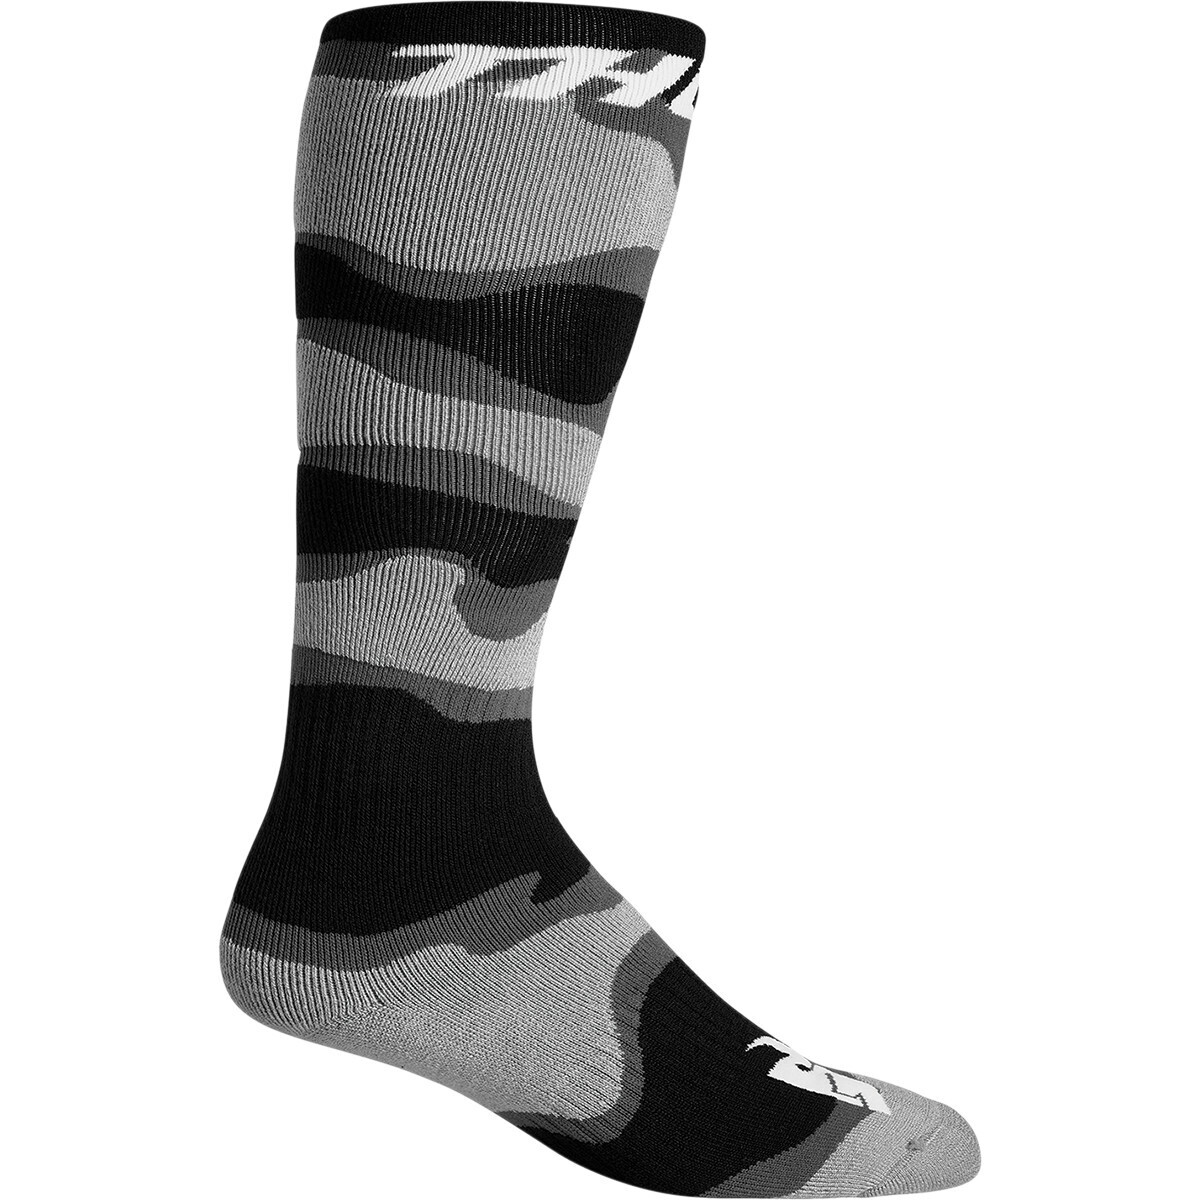 THOR
Youth MX Camo Socks - Gray/White - Size 1-7 (EU32-39)